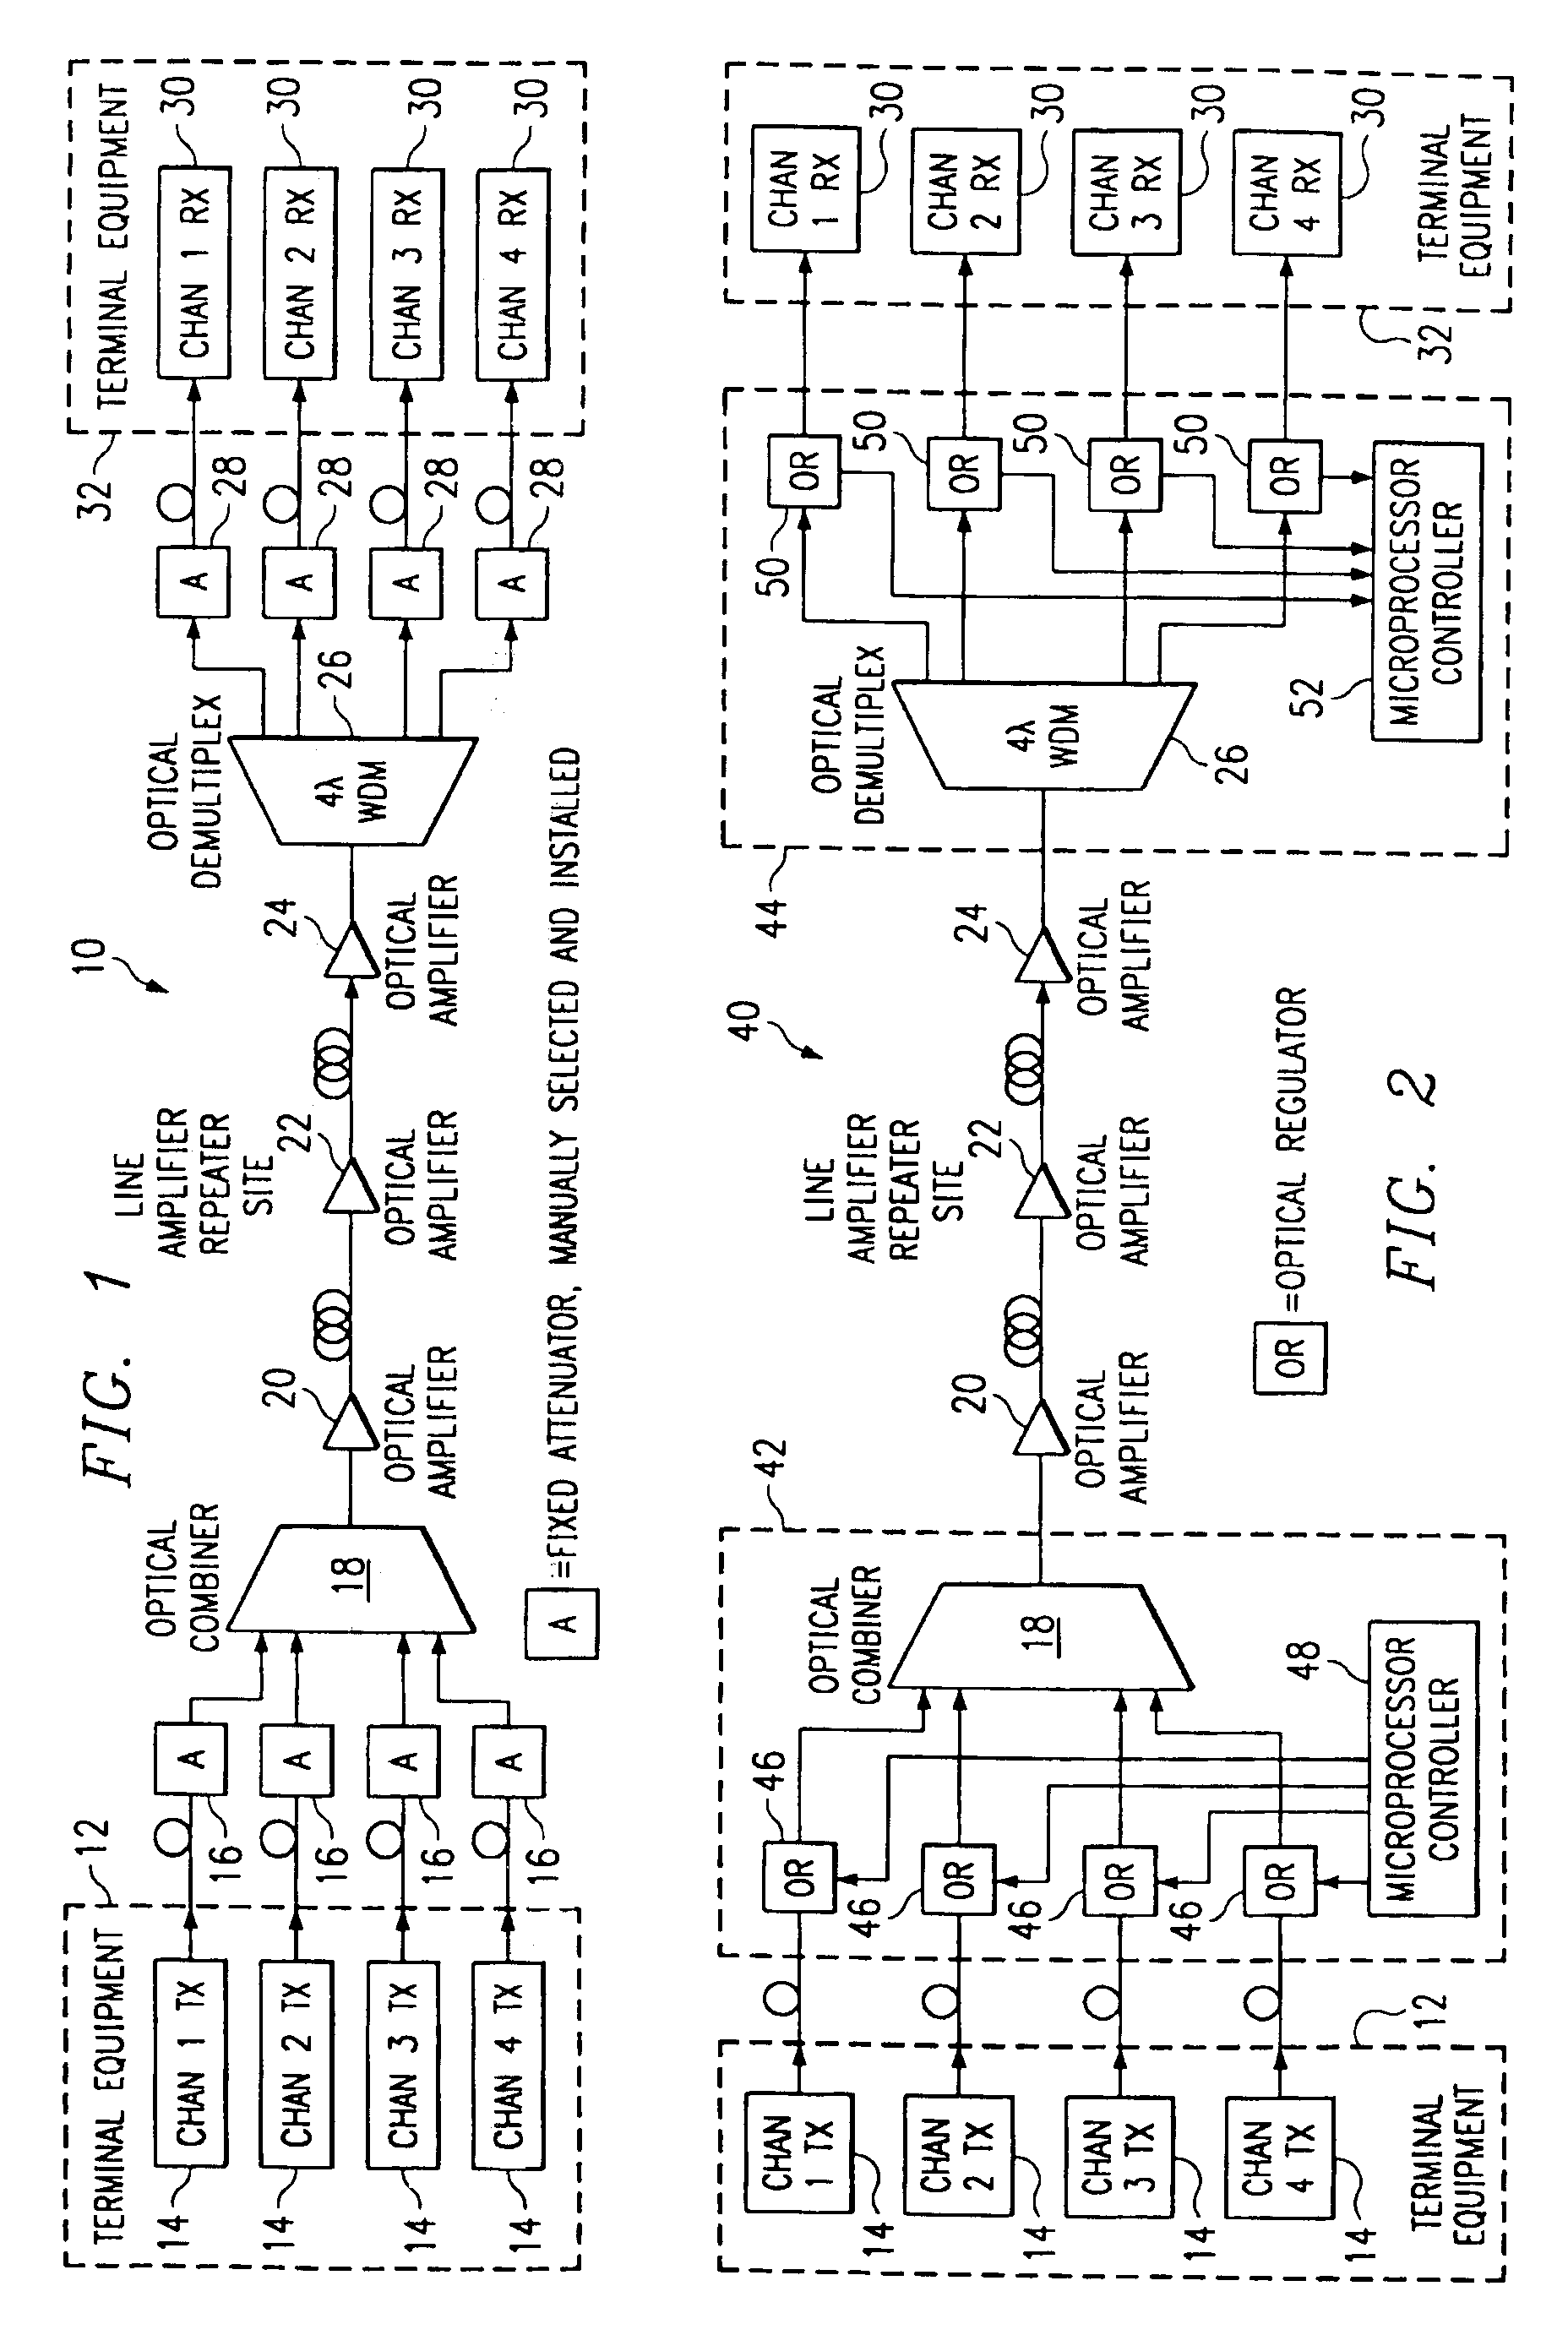 Optical channel regulator and method